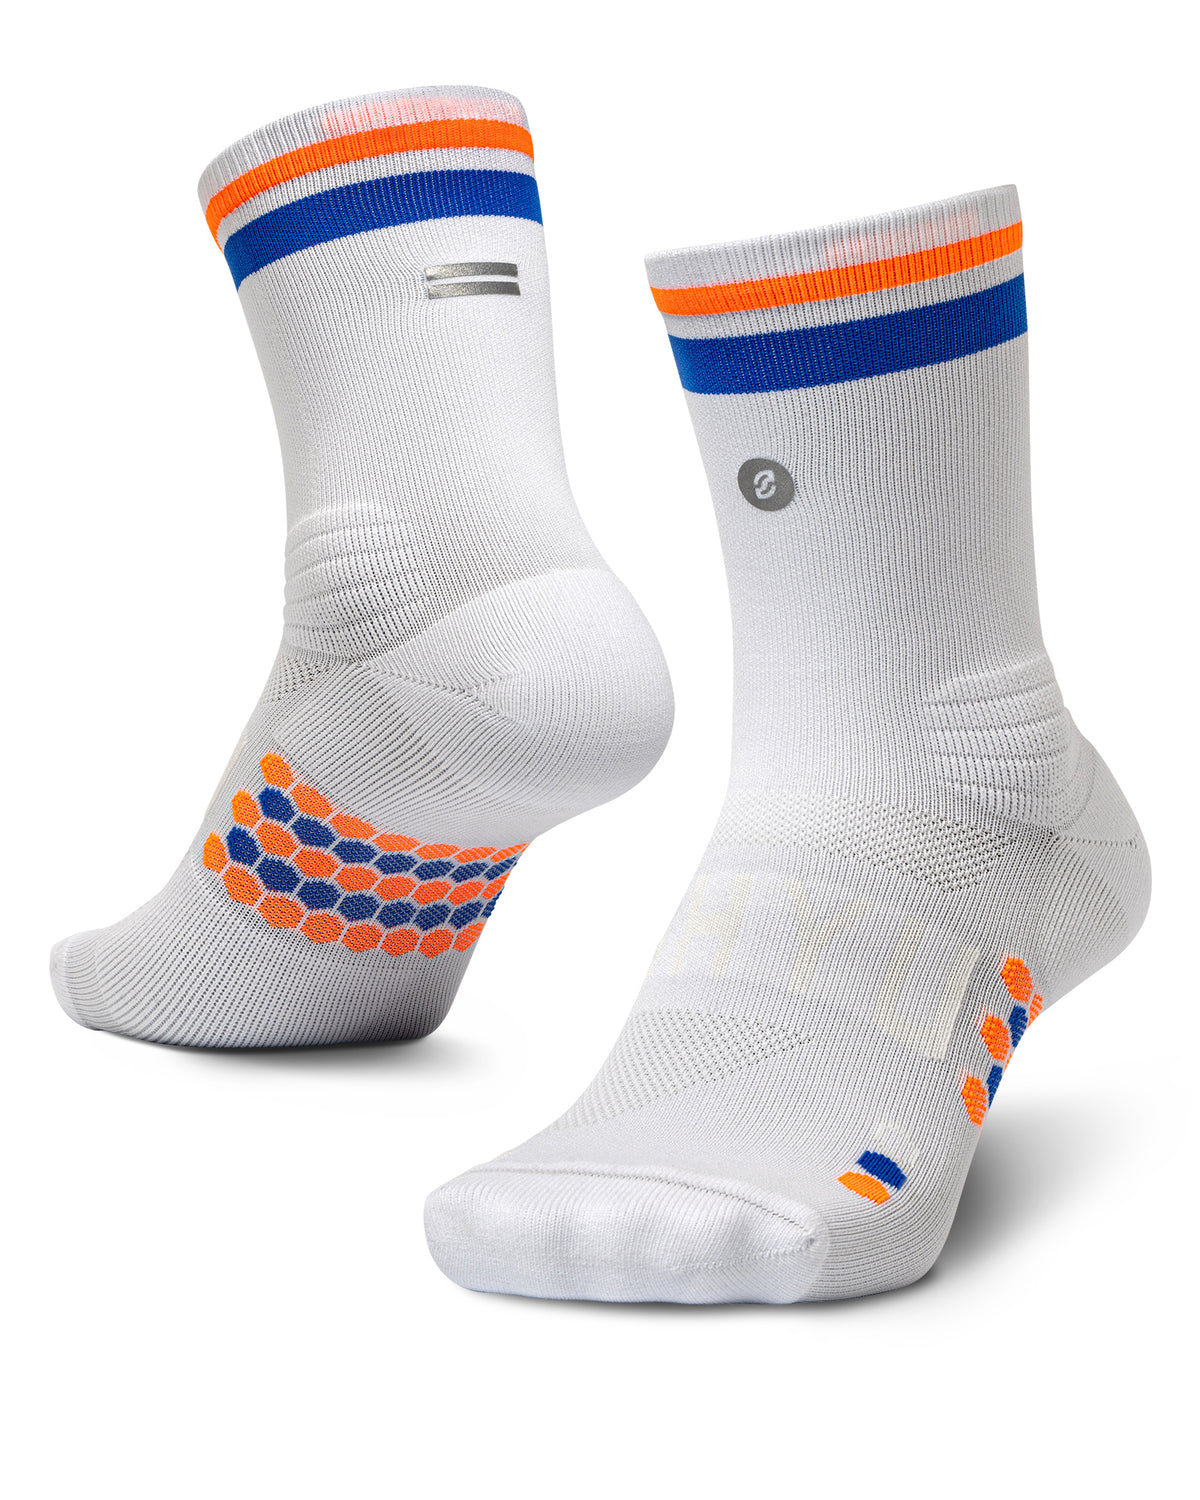 SHYU racing socks - white | blue | orange